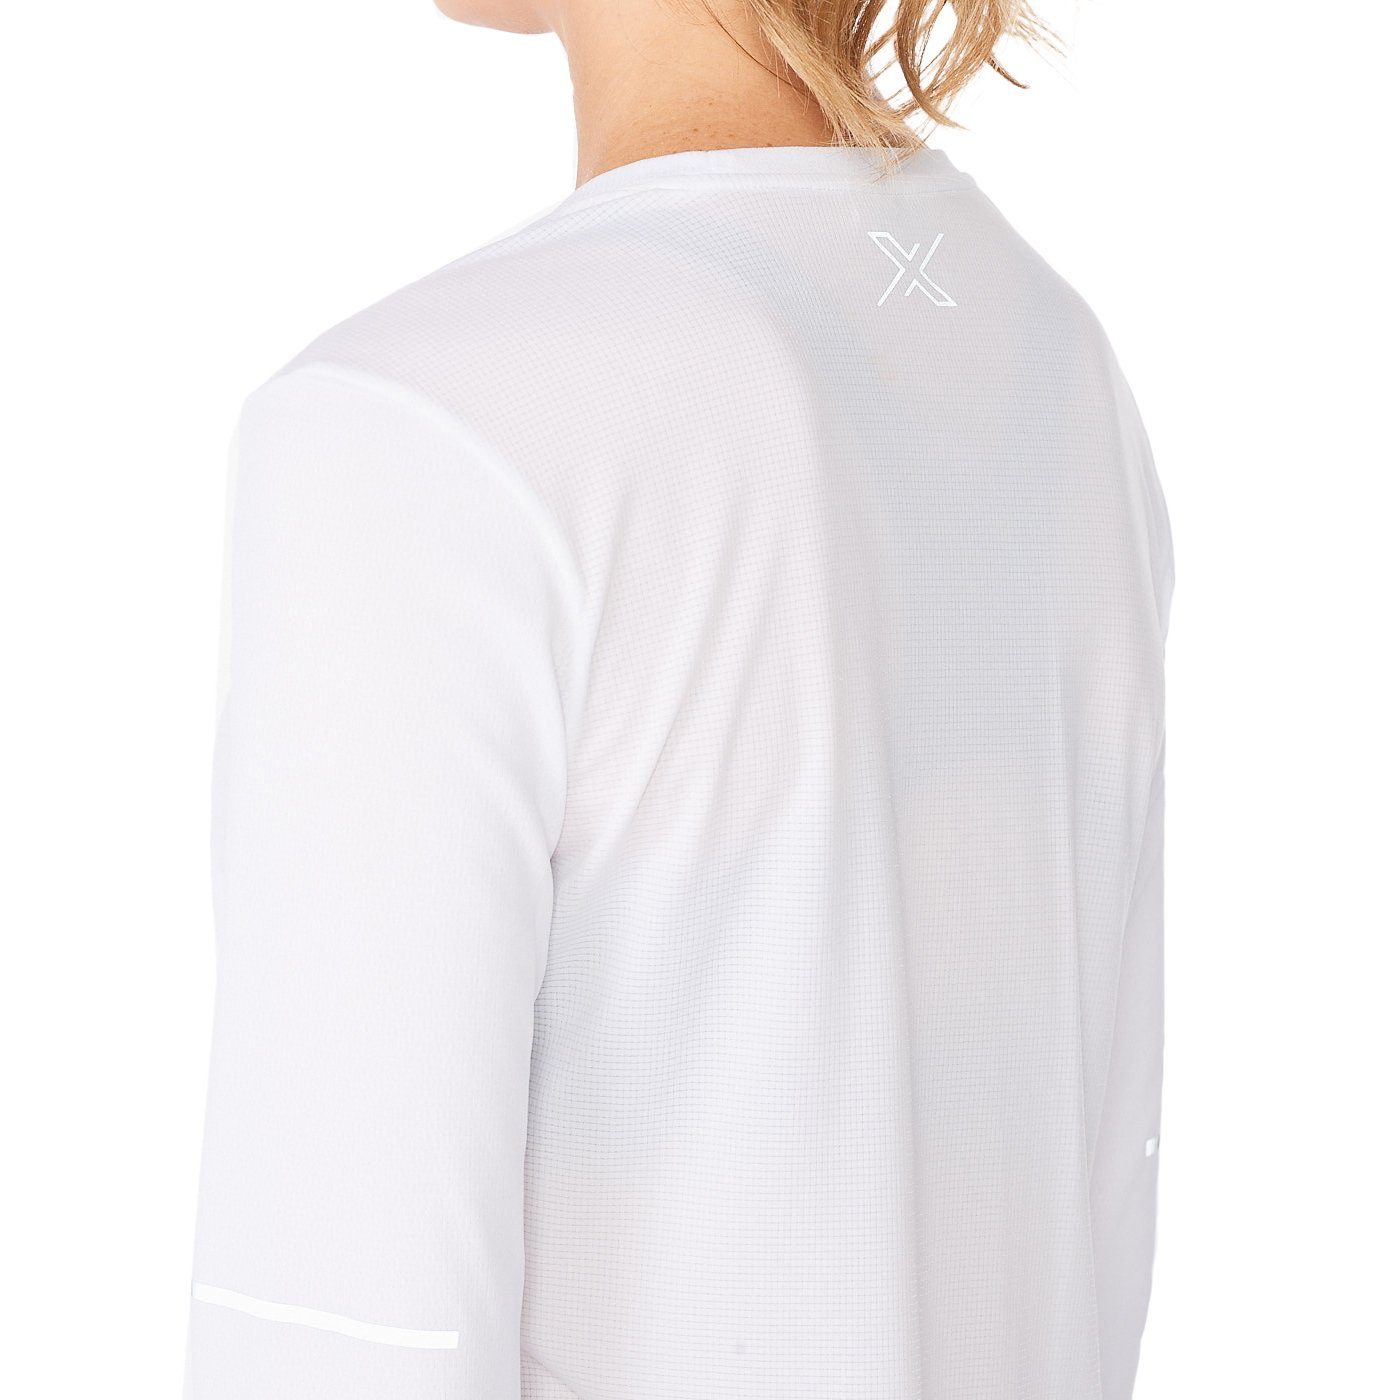 2xU Longsleeve Laufshirt Aero  X-VENT White/Silver Technologie / ultra Reflektierende Logos leicht Reflective 